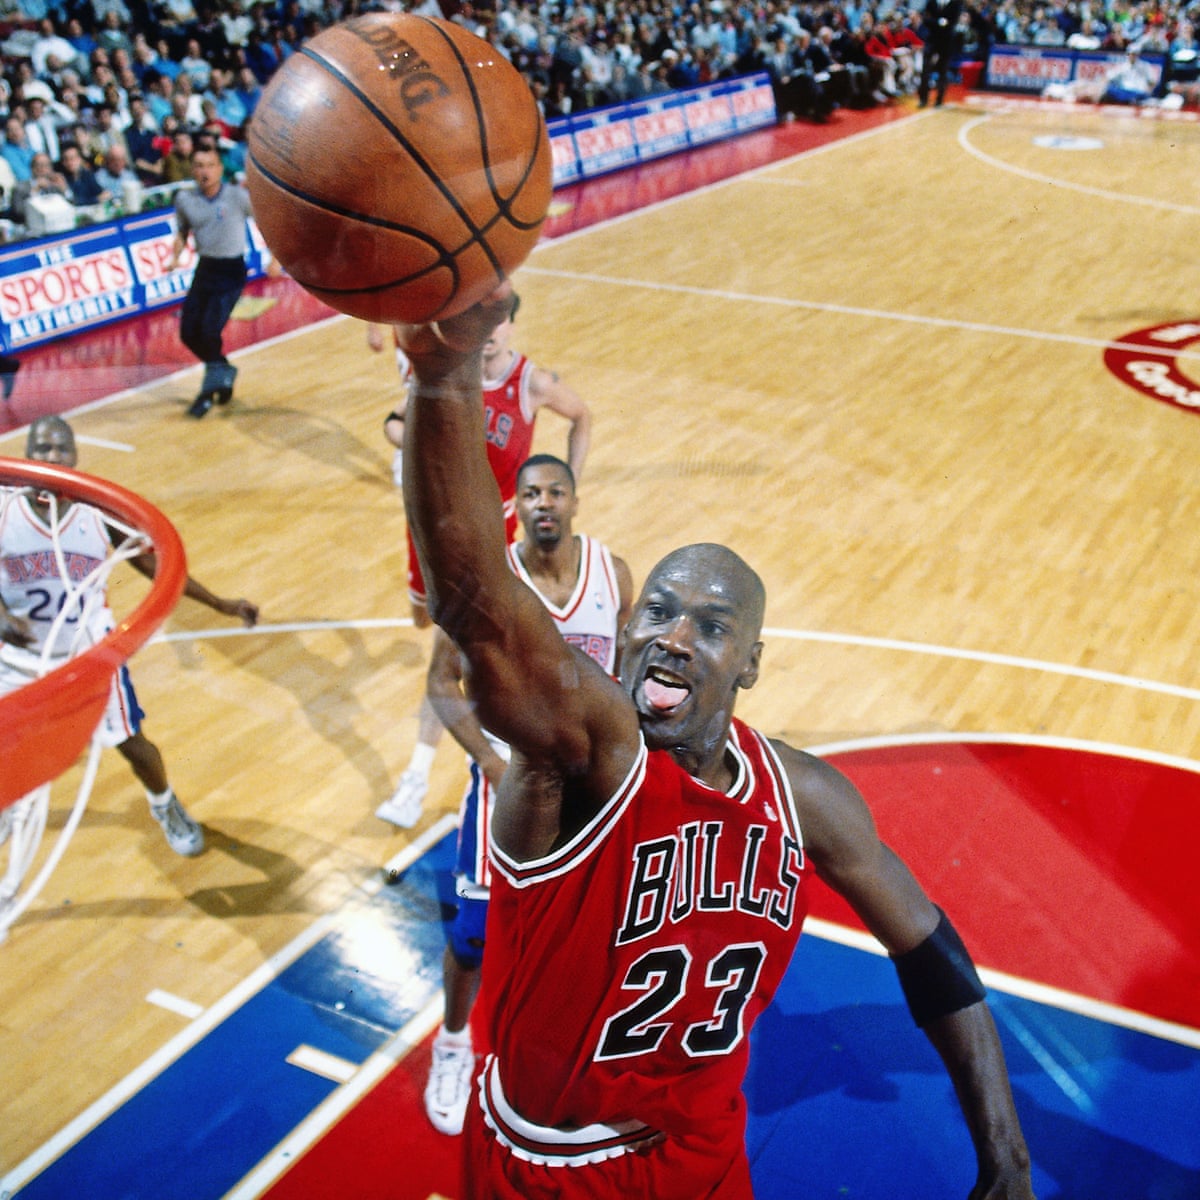 Michael Jordan was years ahead of his game. The Last Dance showed that he  still is | Michael Jordan | The Guardian